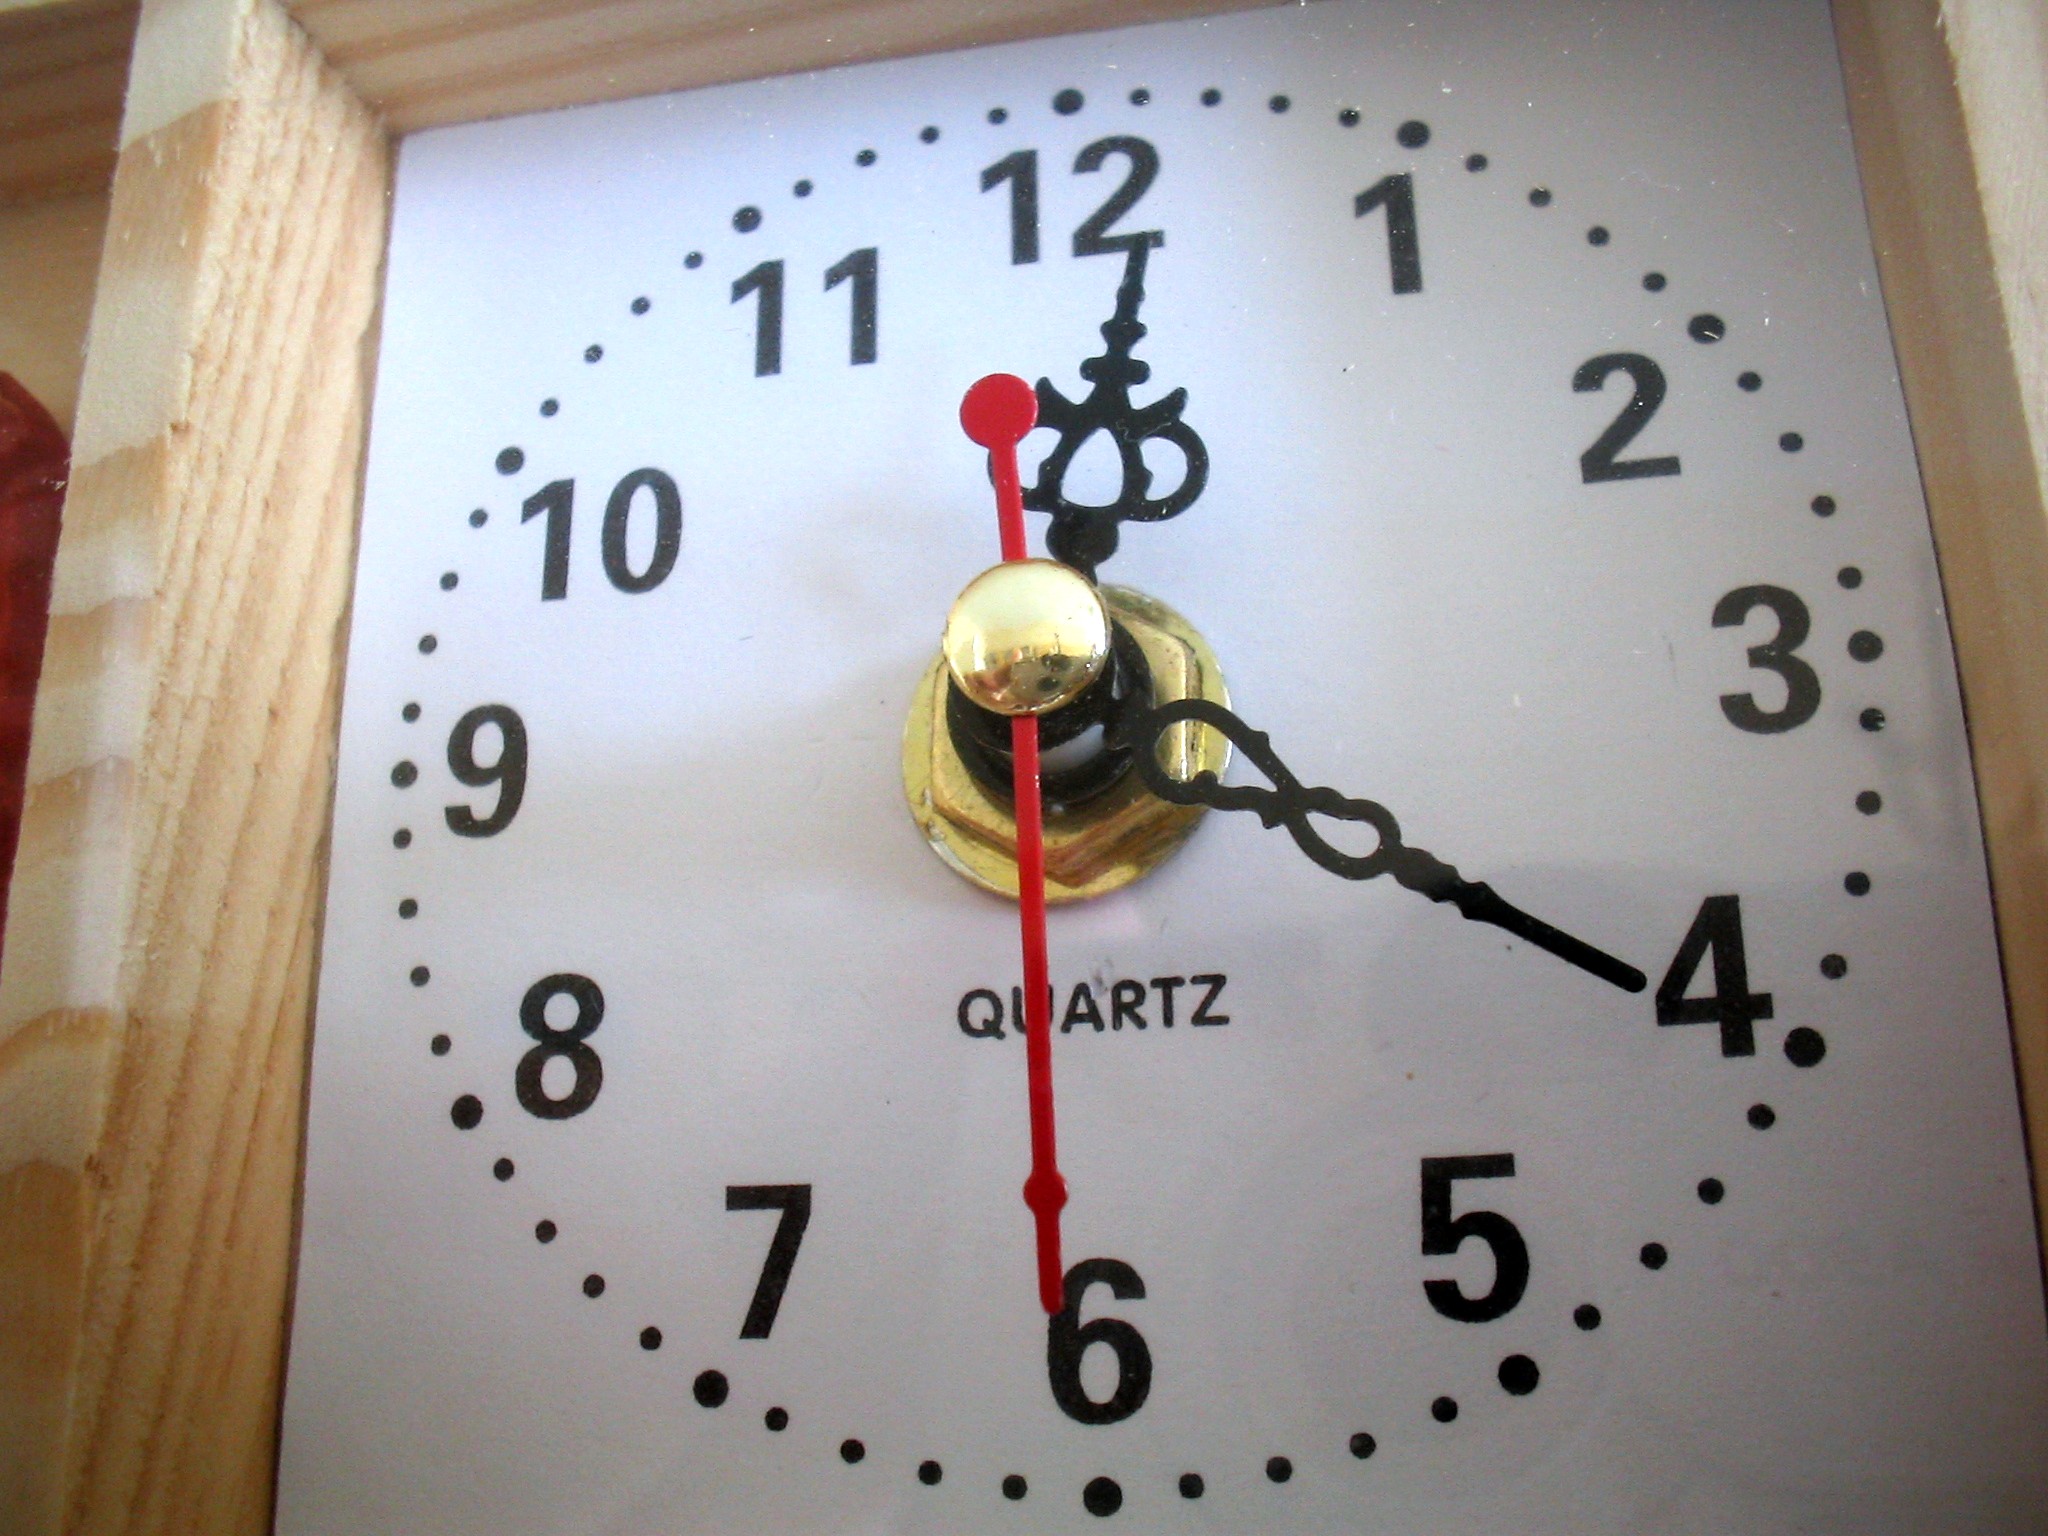 Quartz clock - Wikipedia